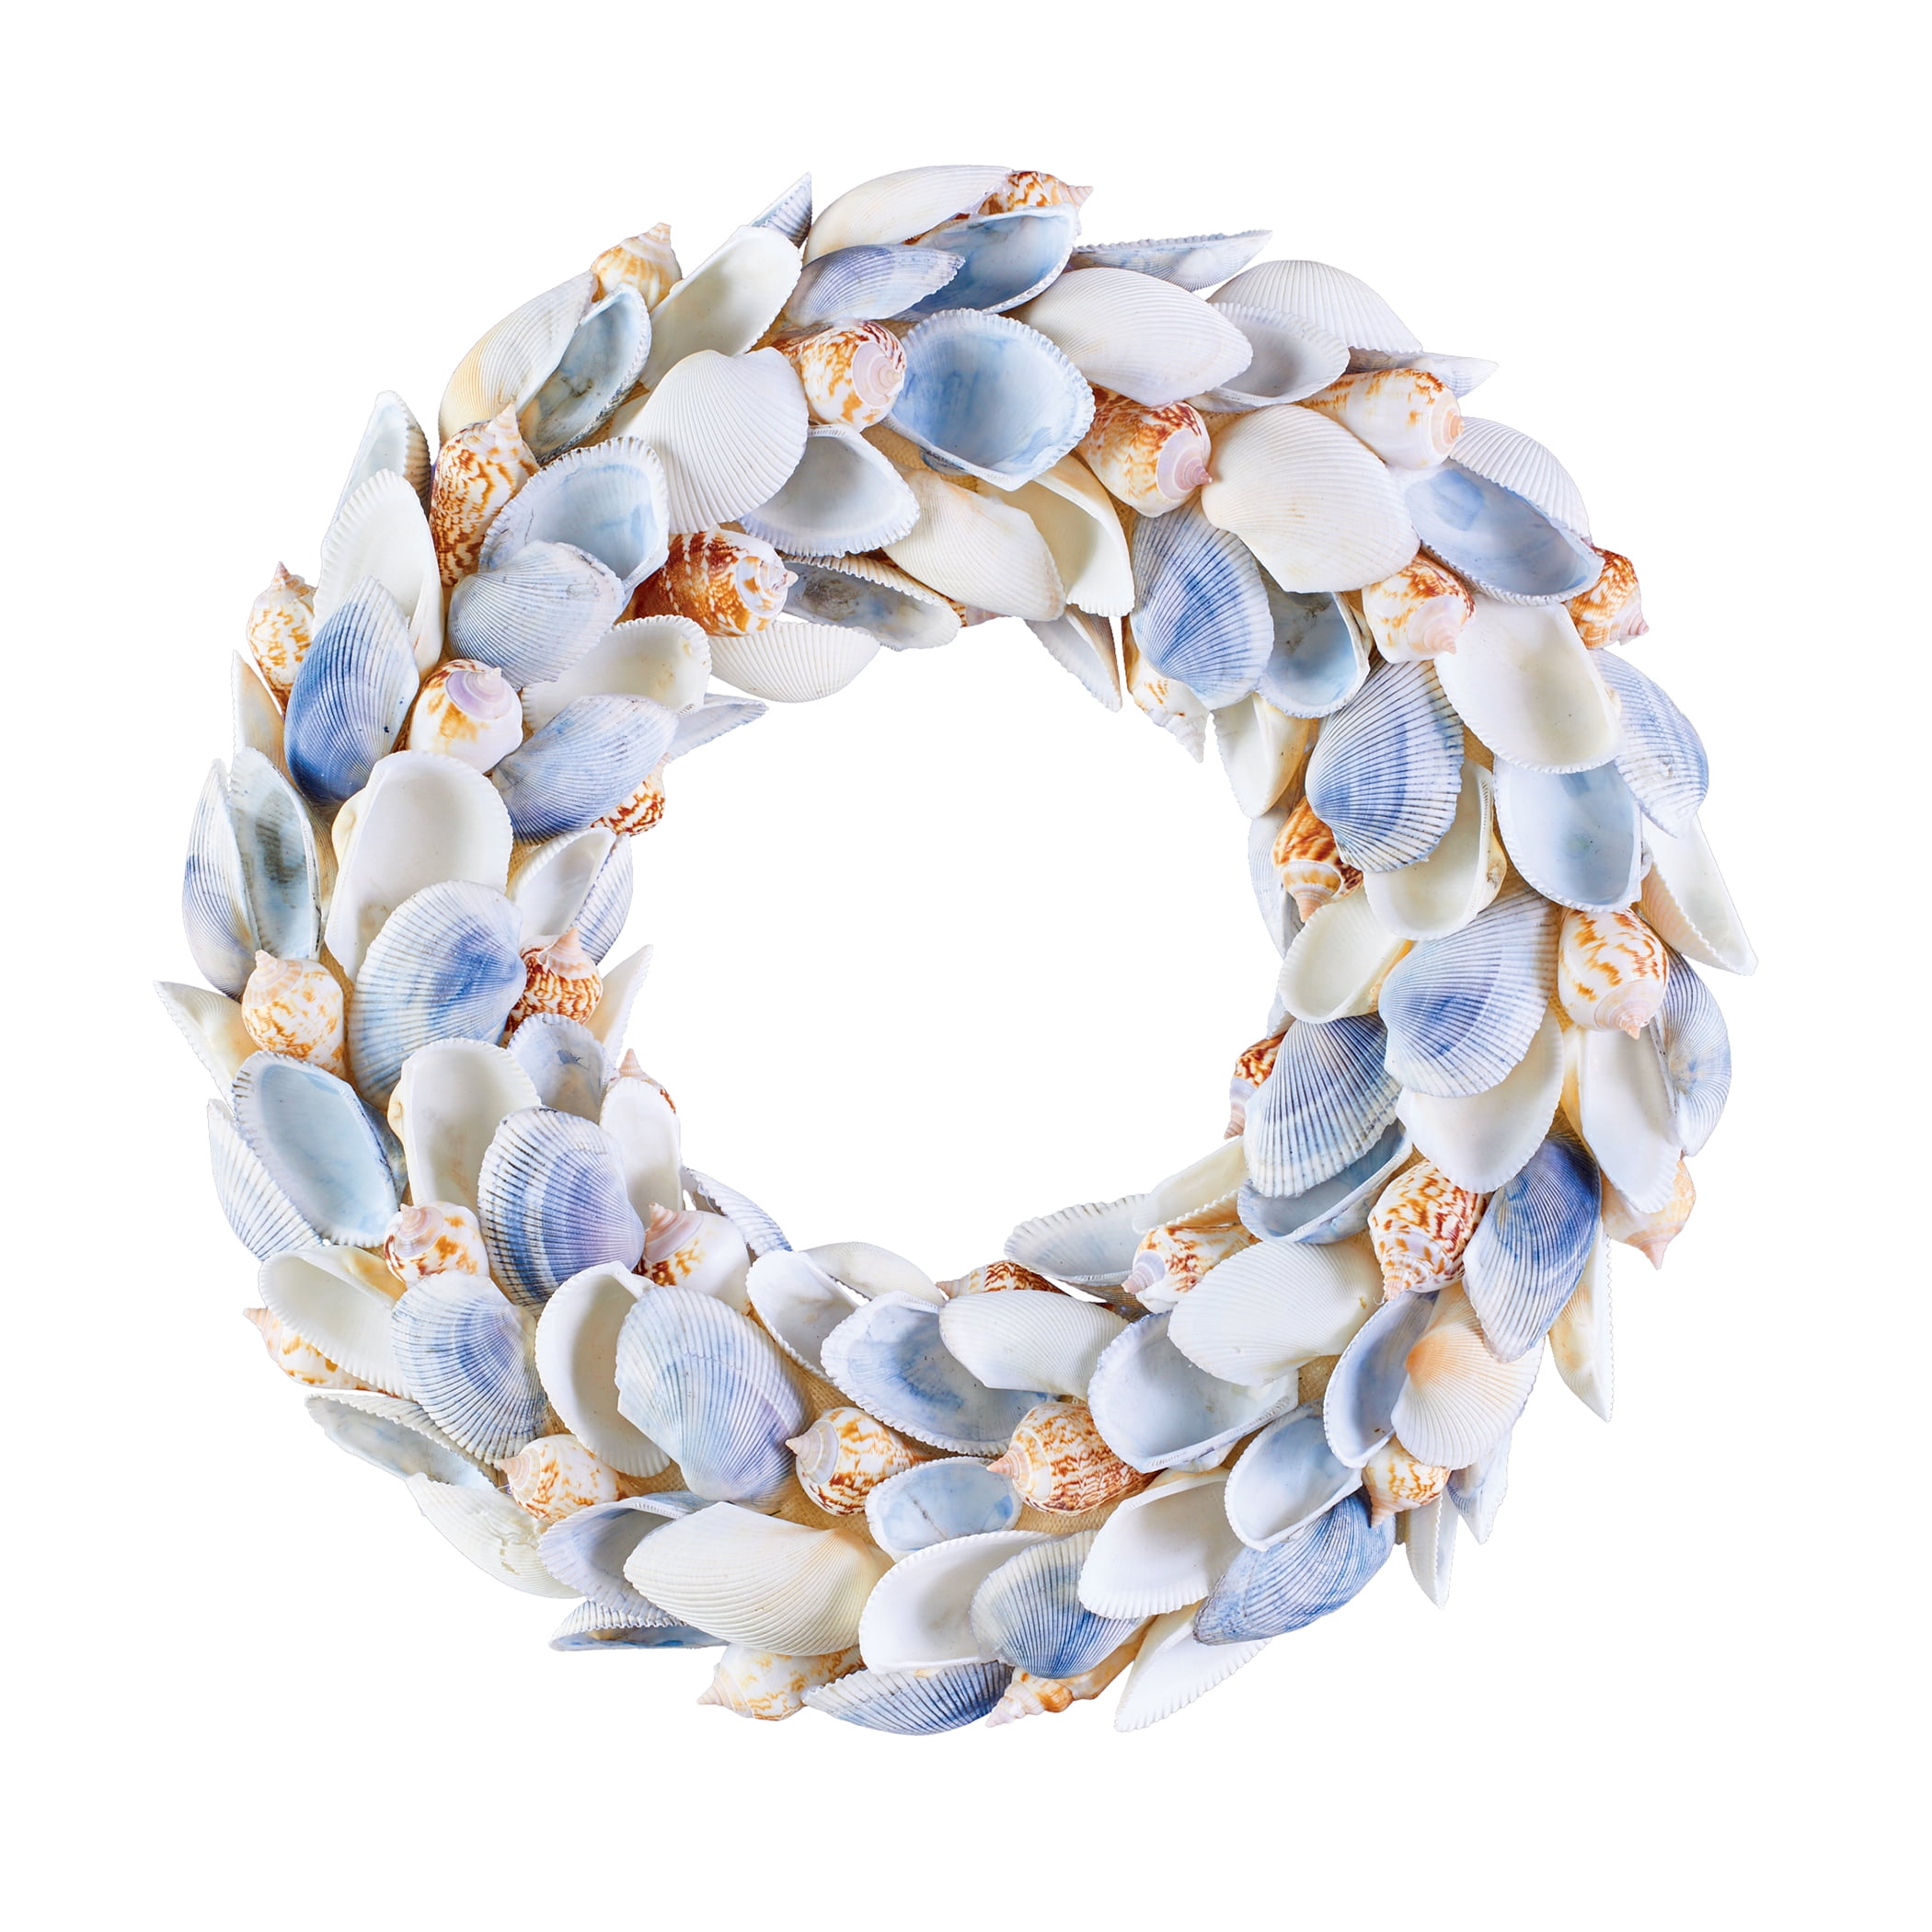 Coastal Seaside Heart Shaped Blue Clam Shells Welcome Door Wreath 